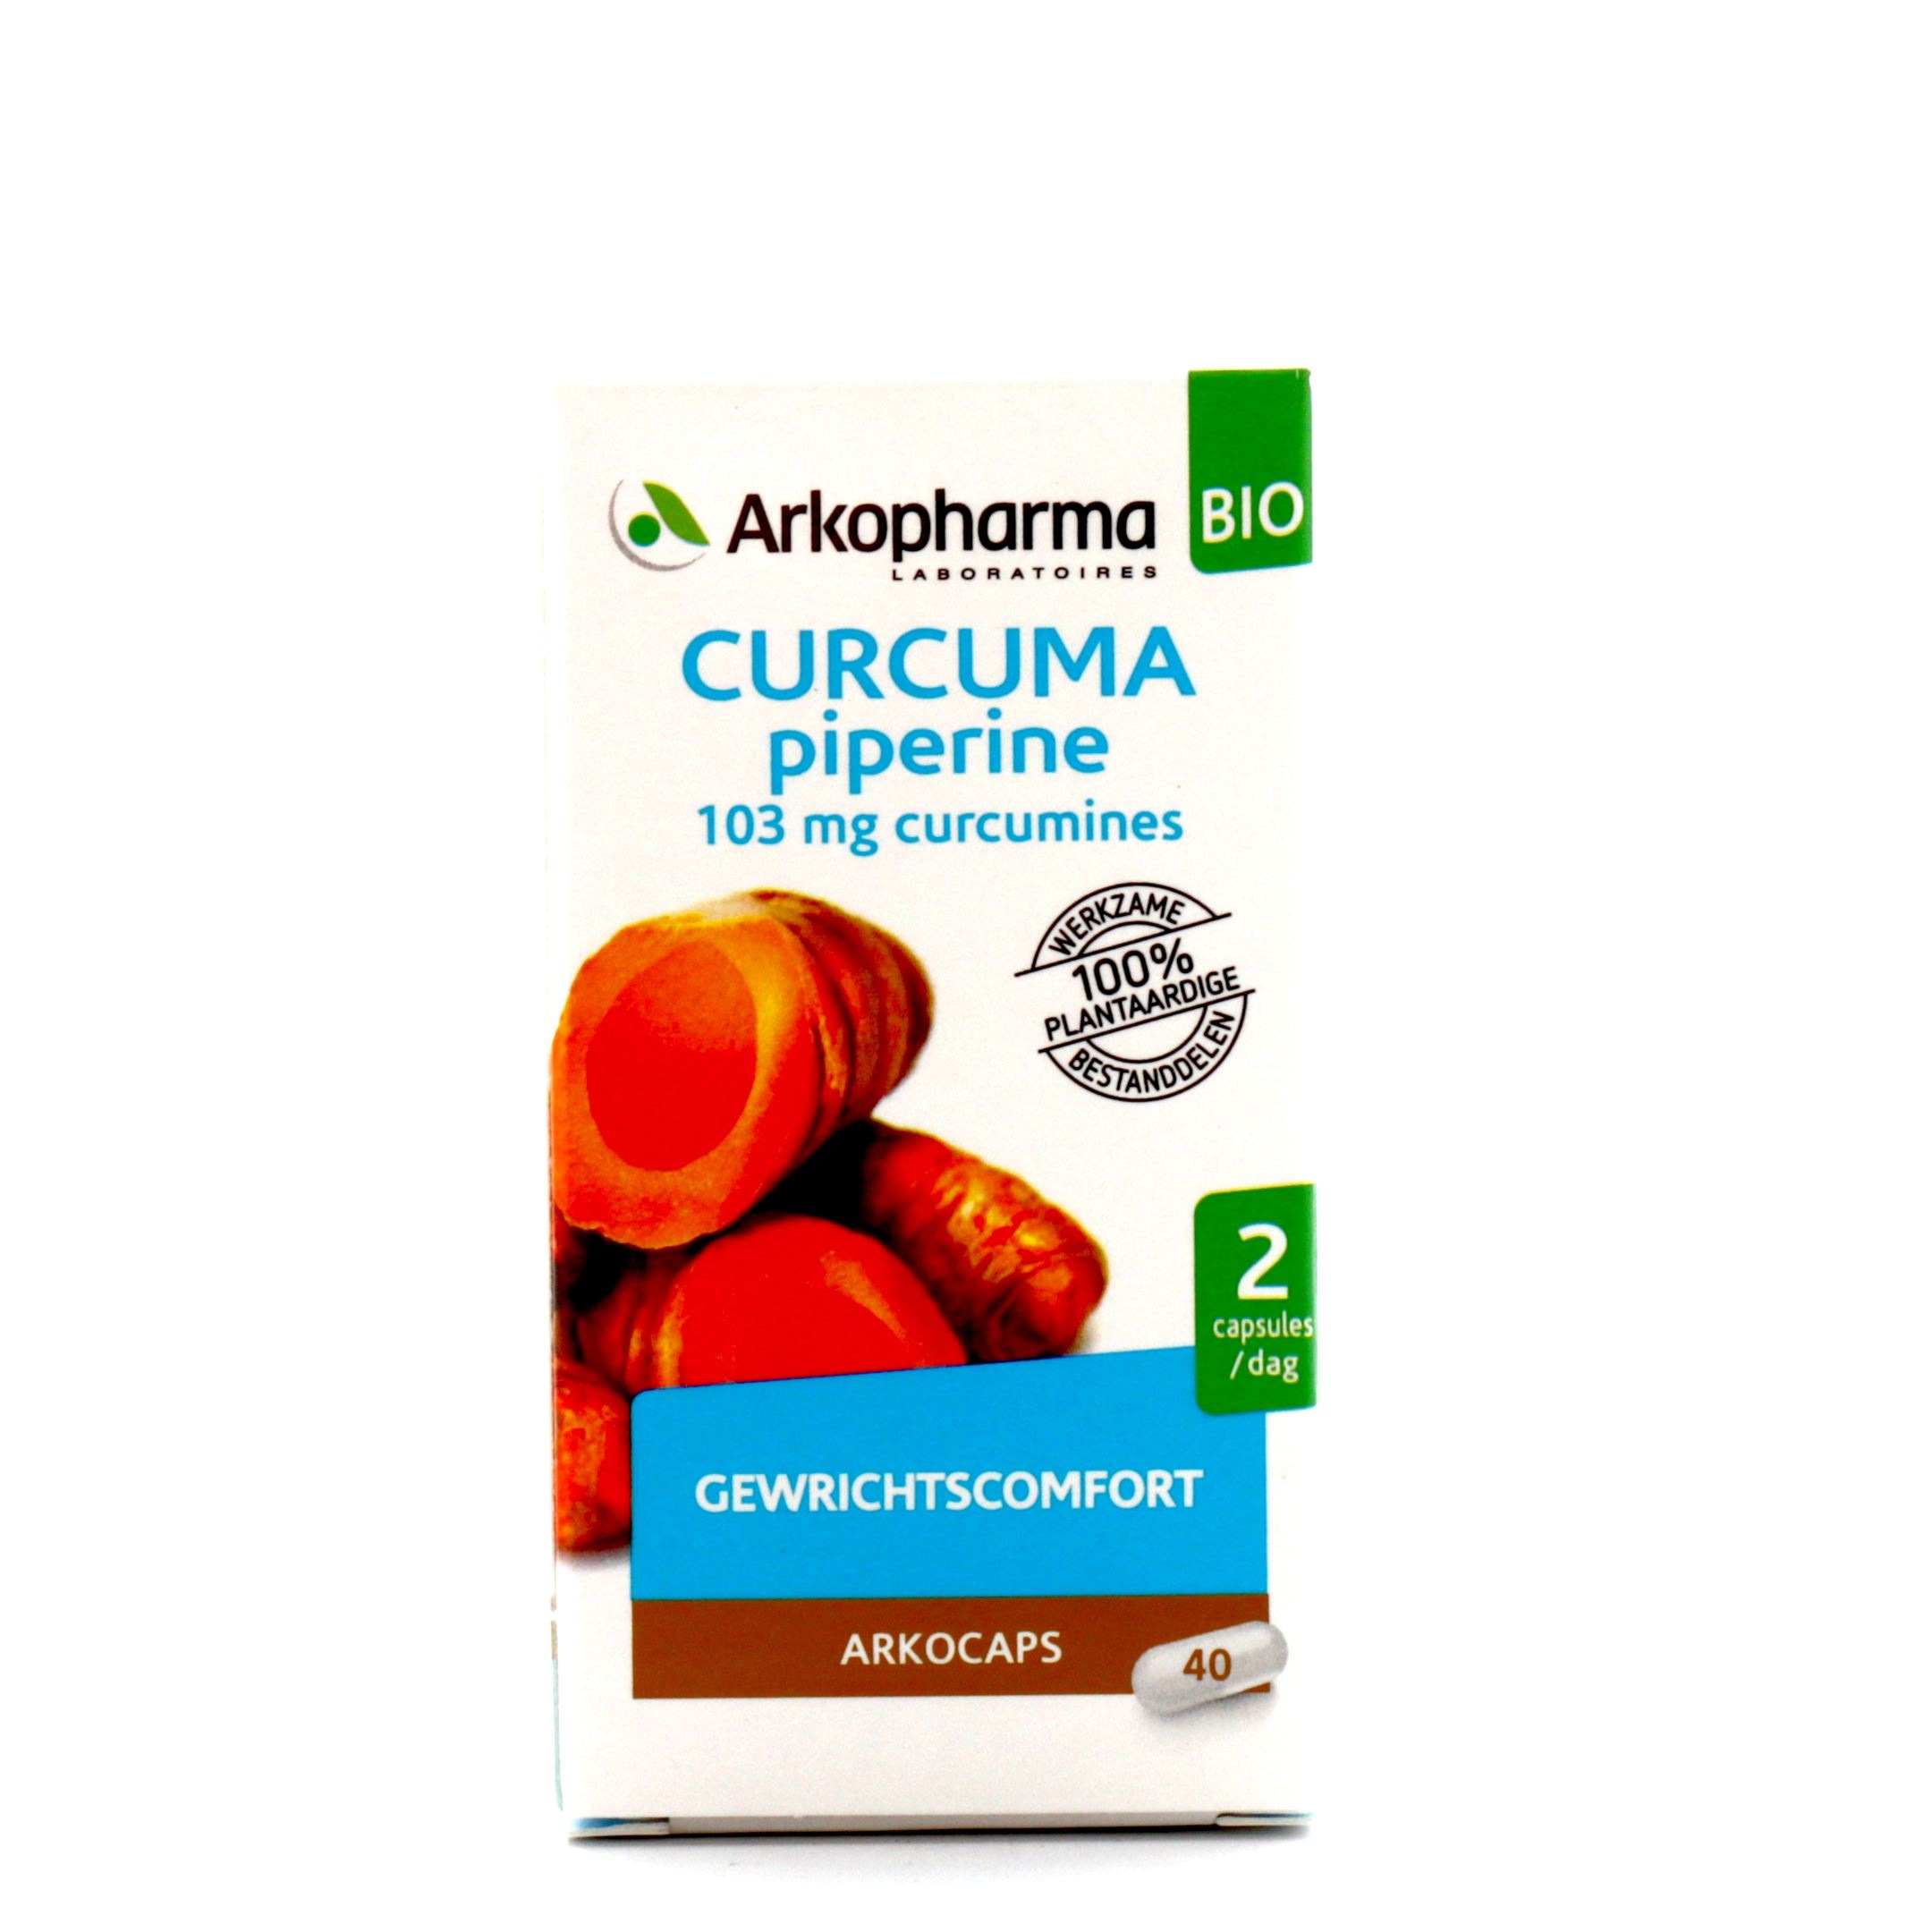 Curcuma Bio : du curcuma bio en poudre, les bienfaits de la pipérine